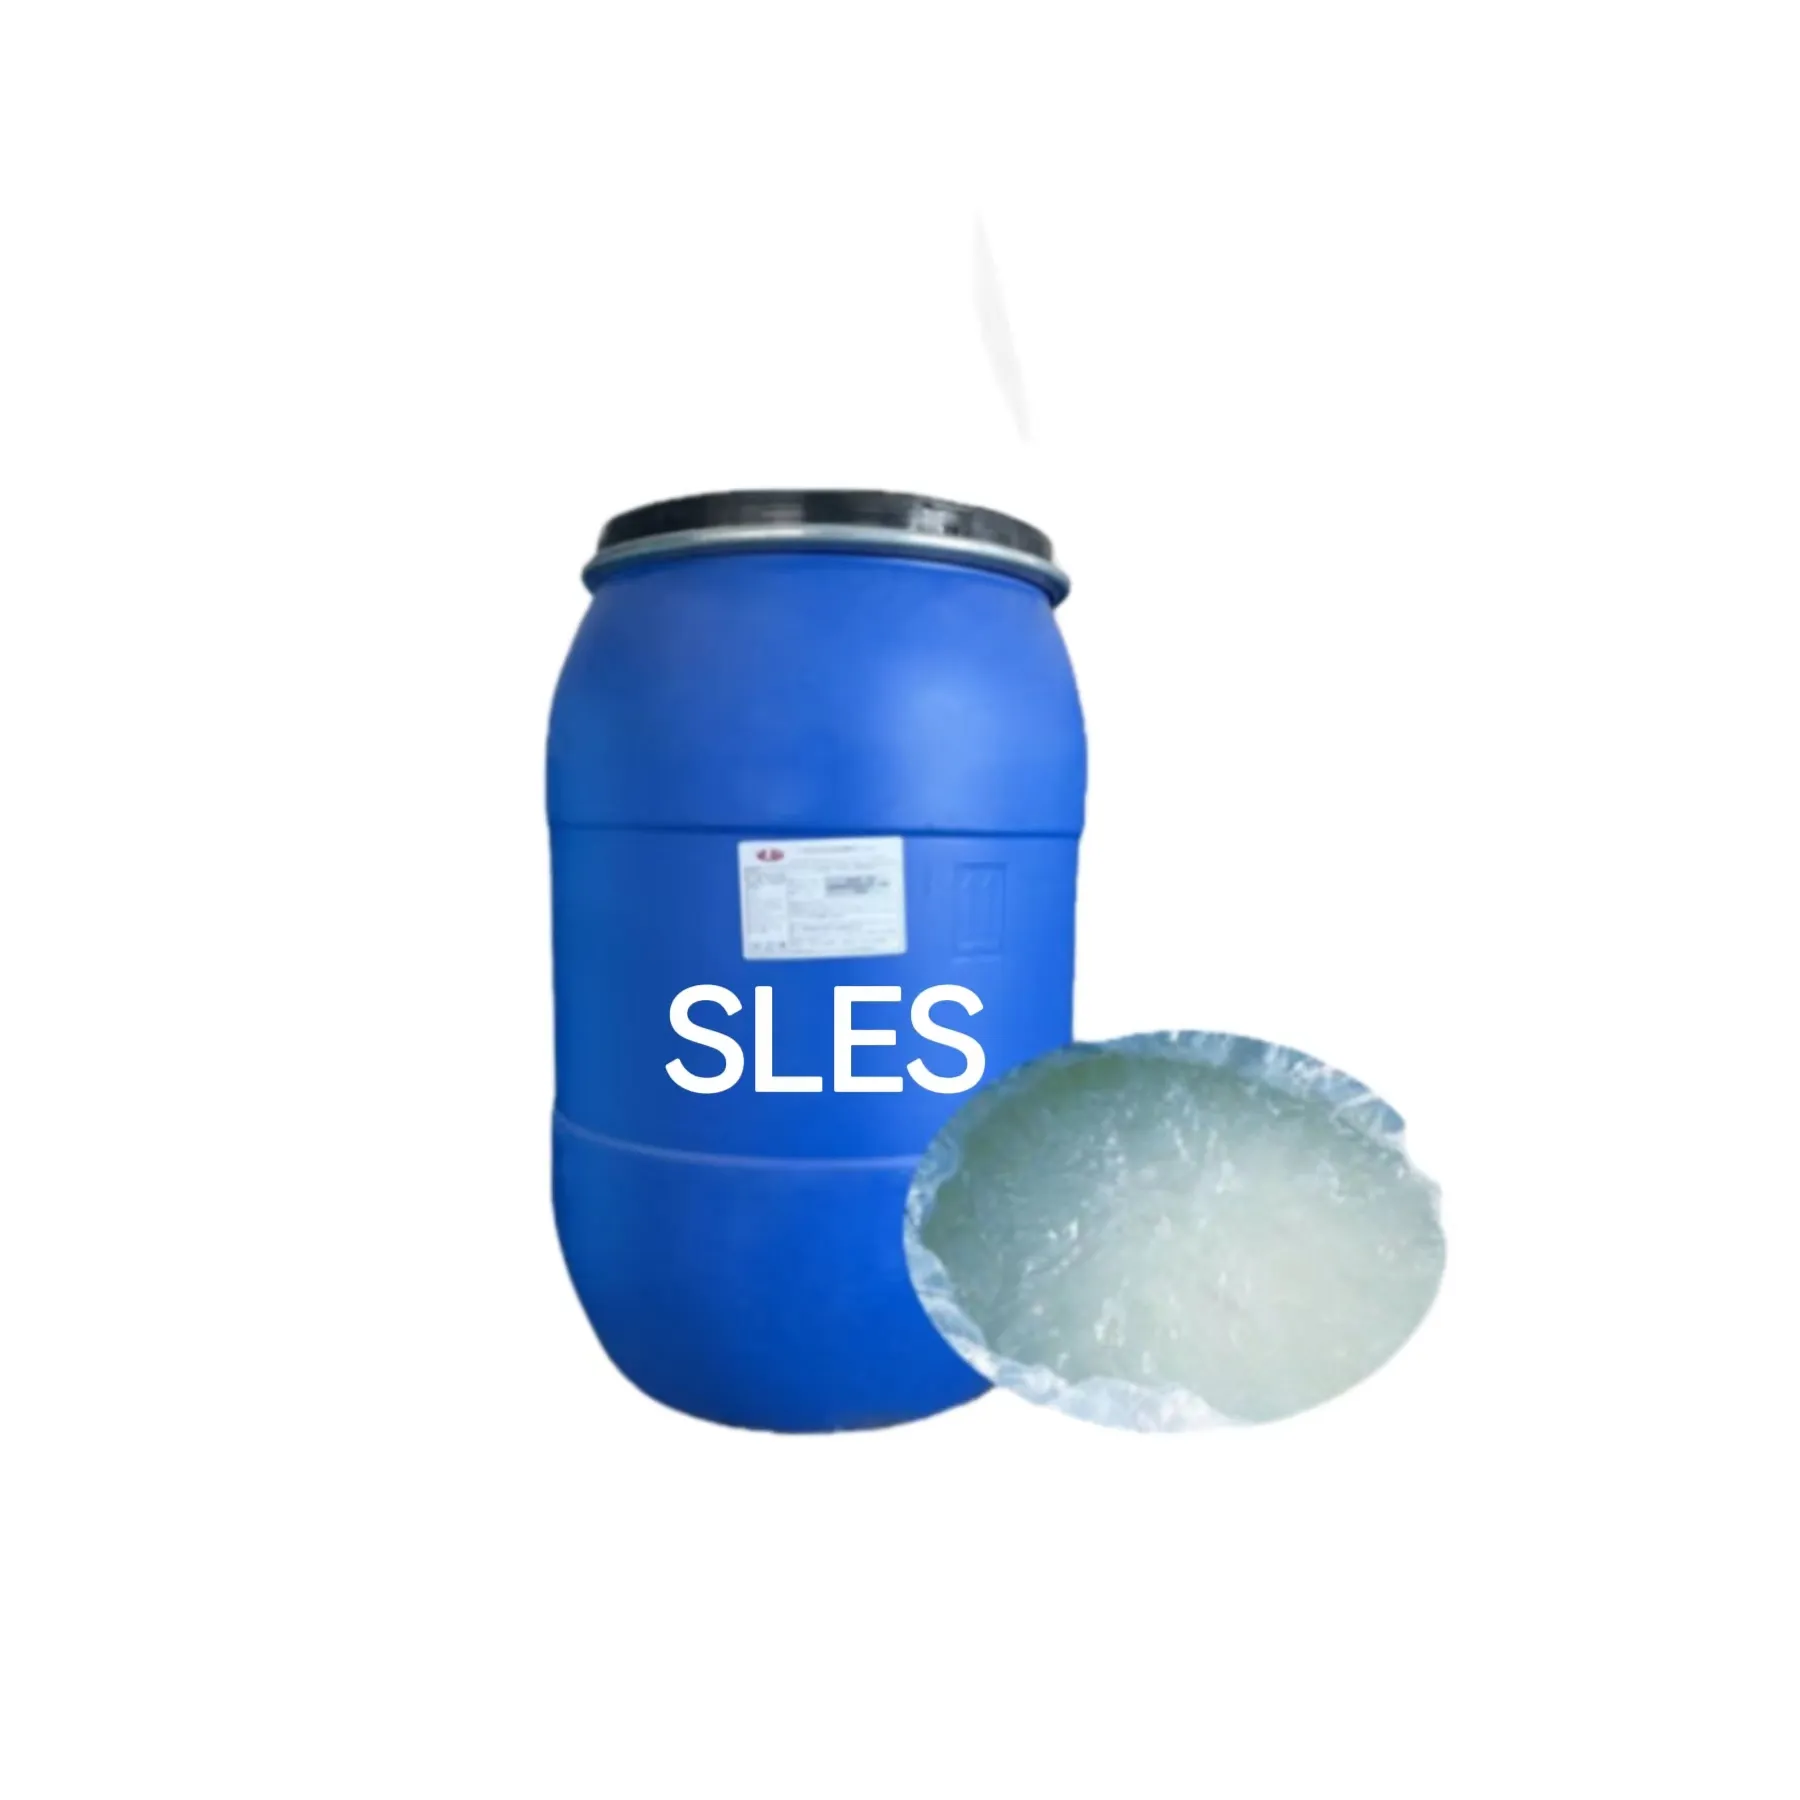 Sles70 % sodyum Lauryl eter sülfat fabrika doğrudan tedarik SLES 70% Cas 68585-34-2